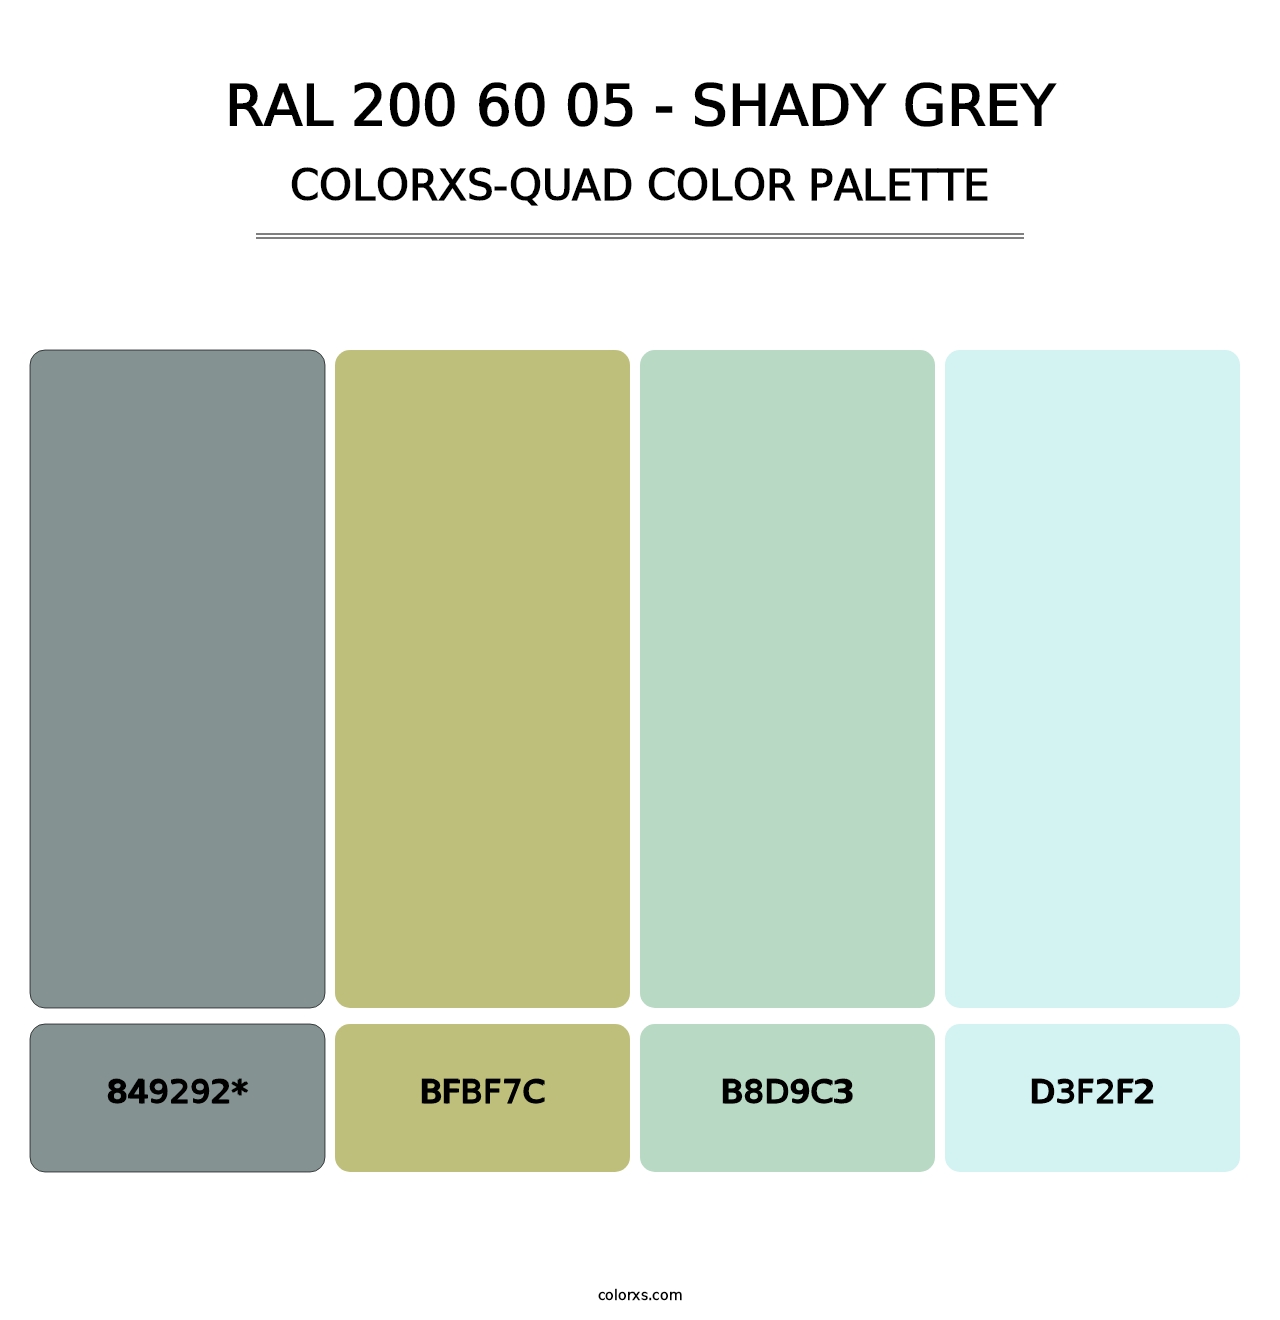 RAL 200 60 05 - Shady Grey - Colorxs Quad Palette